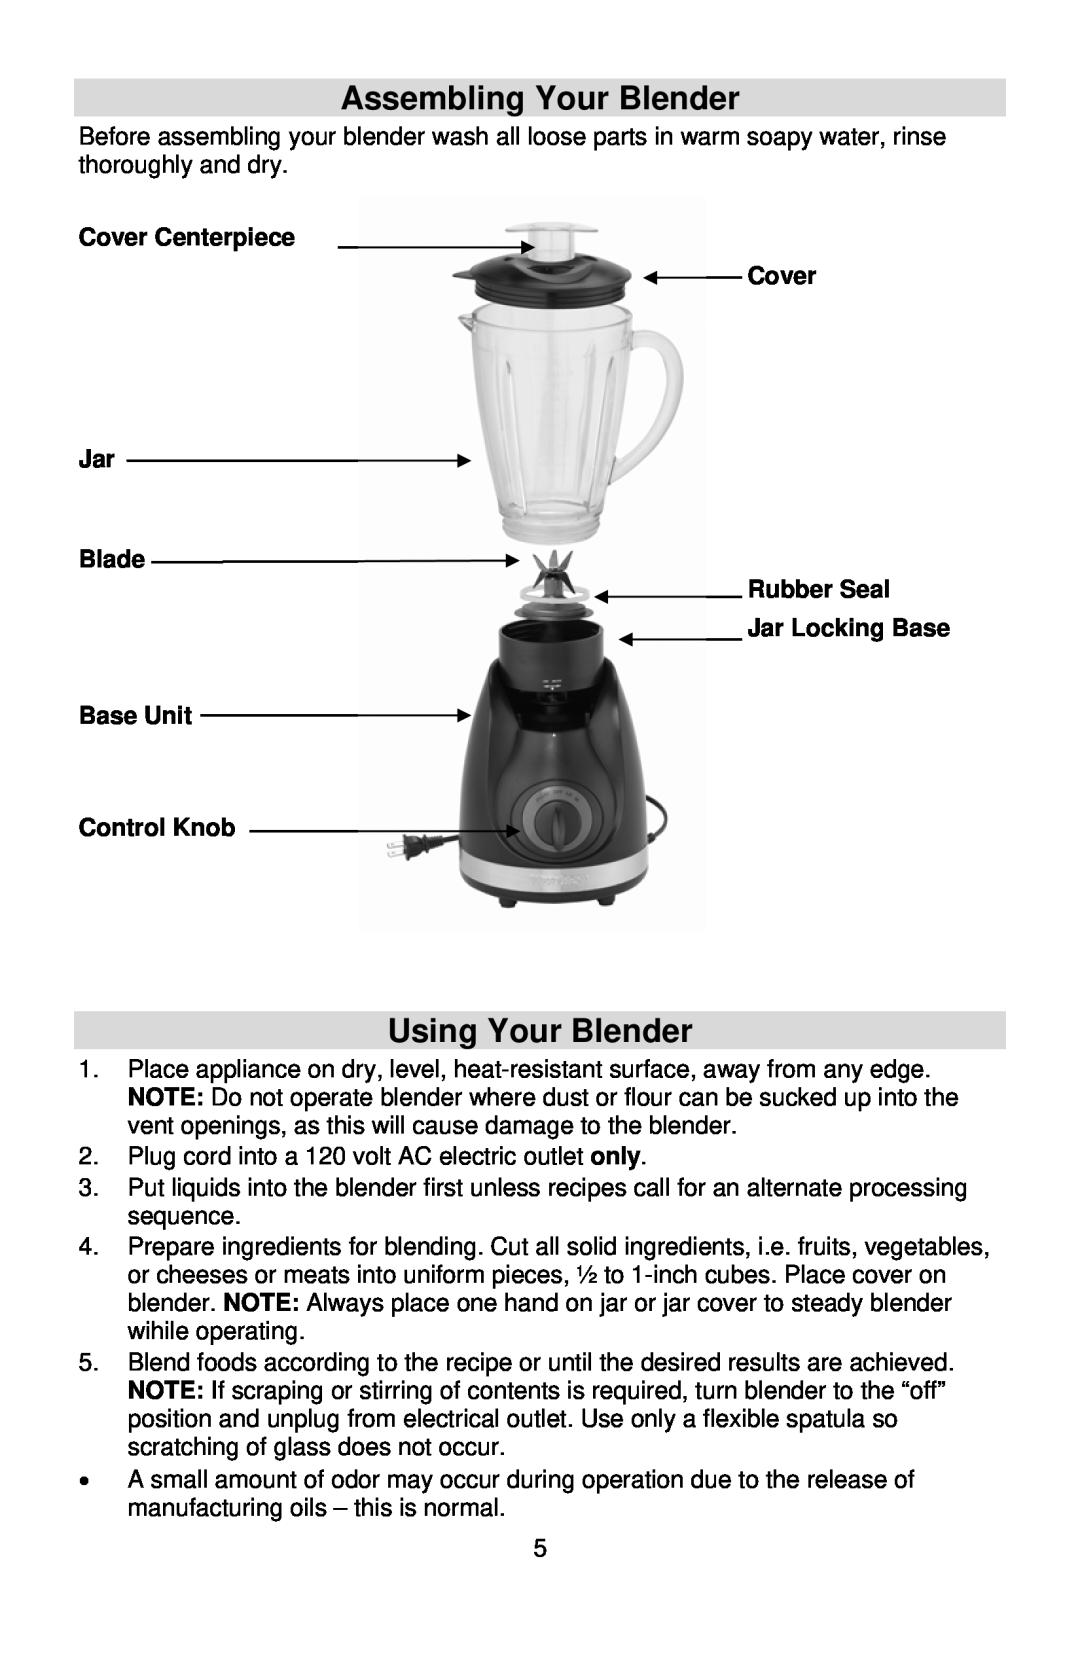 West Bend instruction manual Assembling Your Blender, Using Your Blender, Cover Centerpiece Cover Jar Blade Rubber Seal 